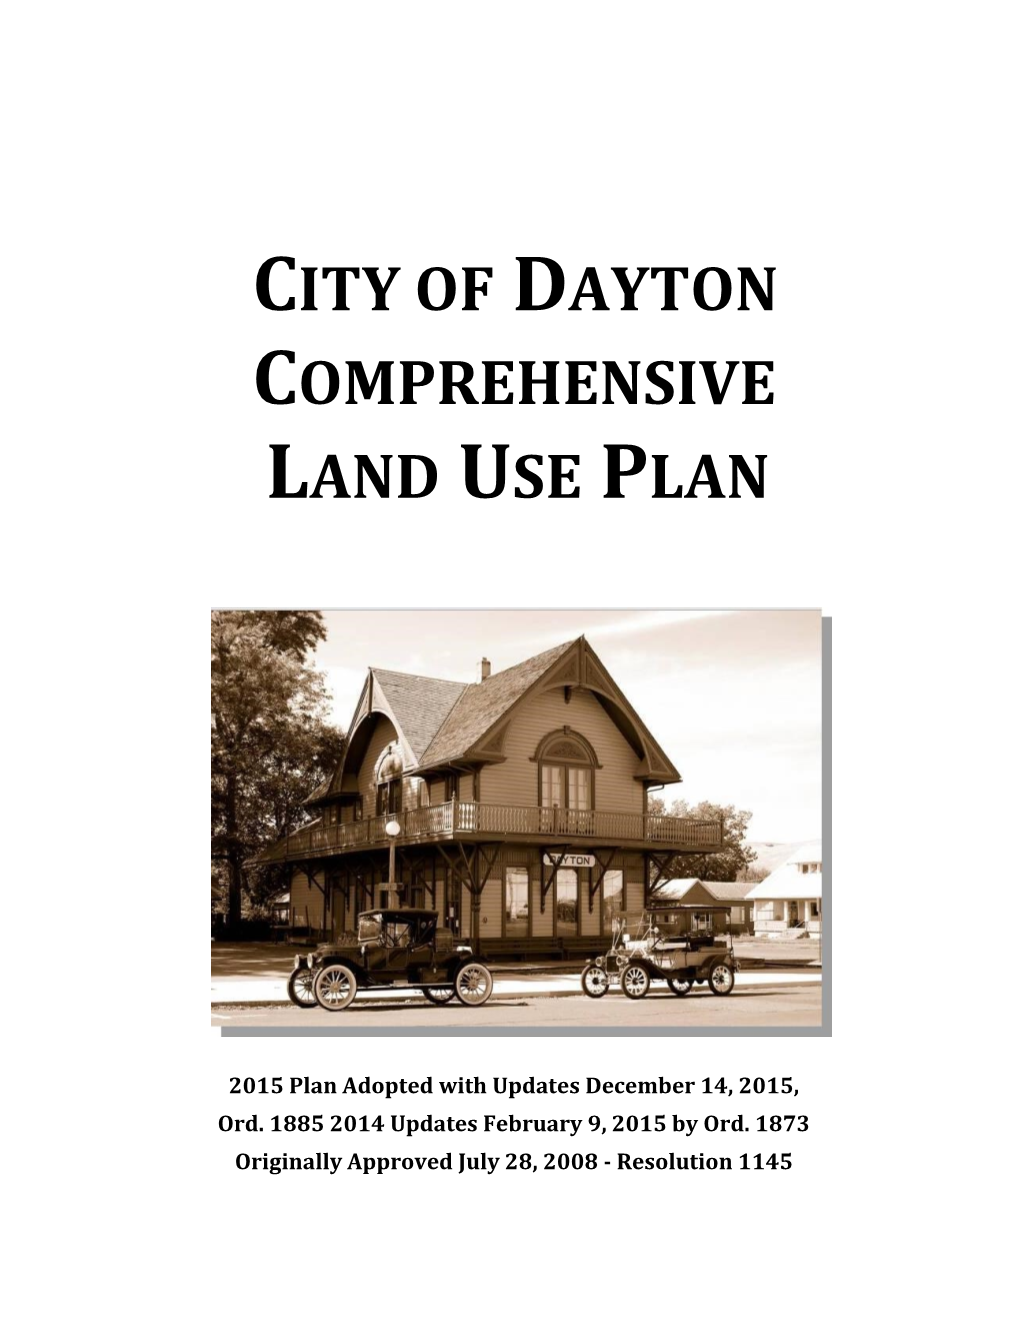 City of Dayton Comprehensive Land Use Plan